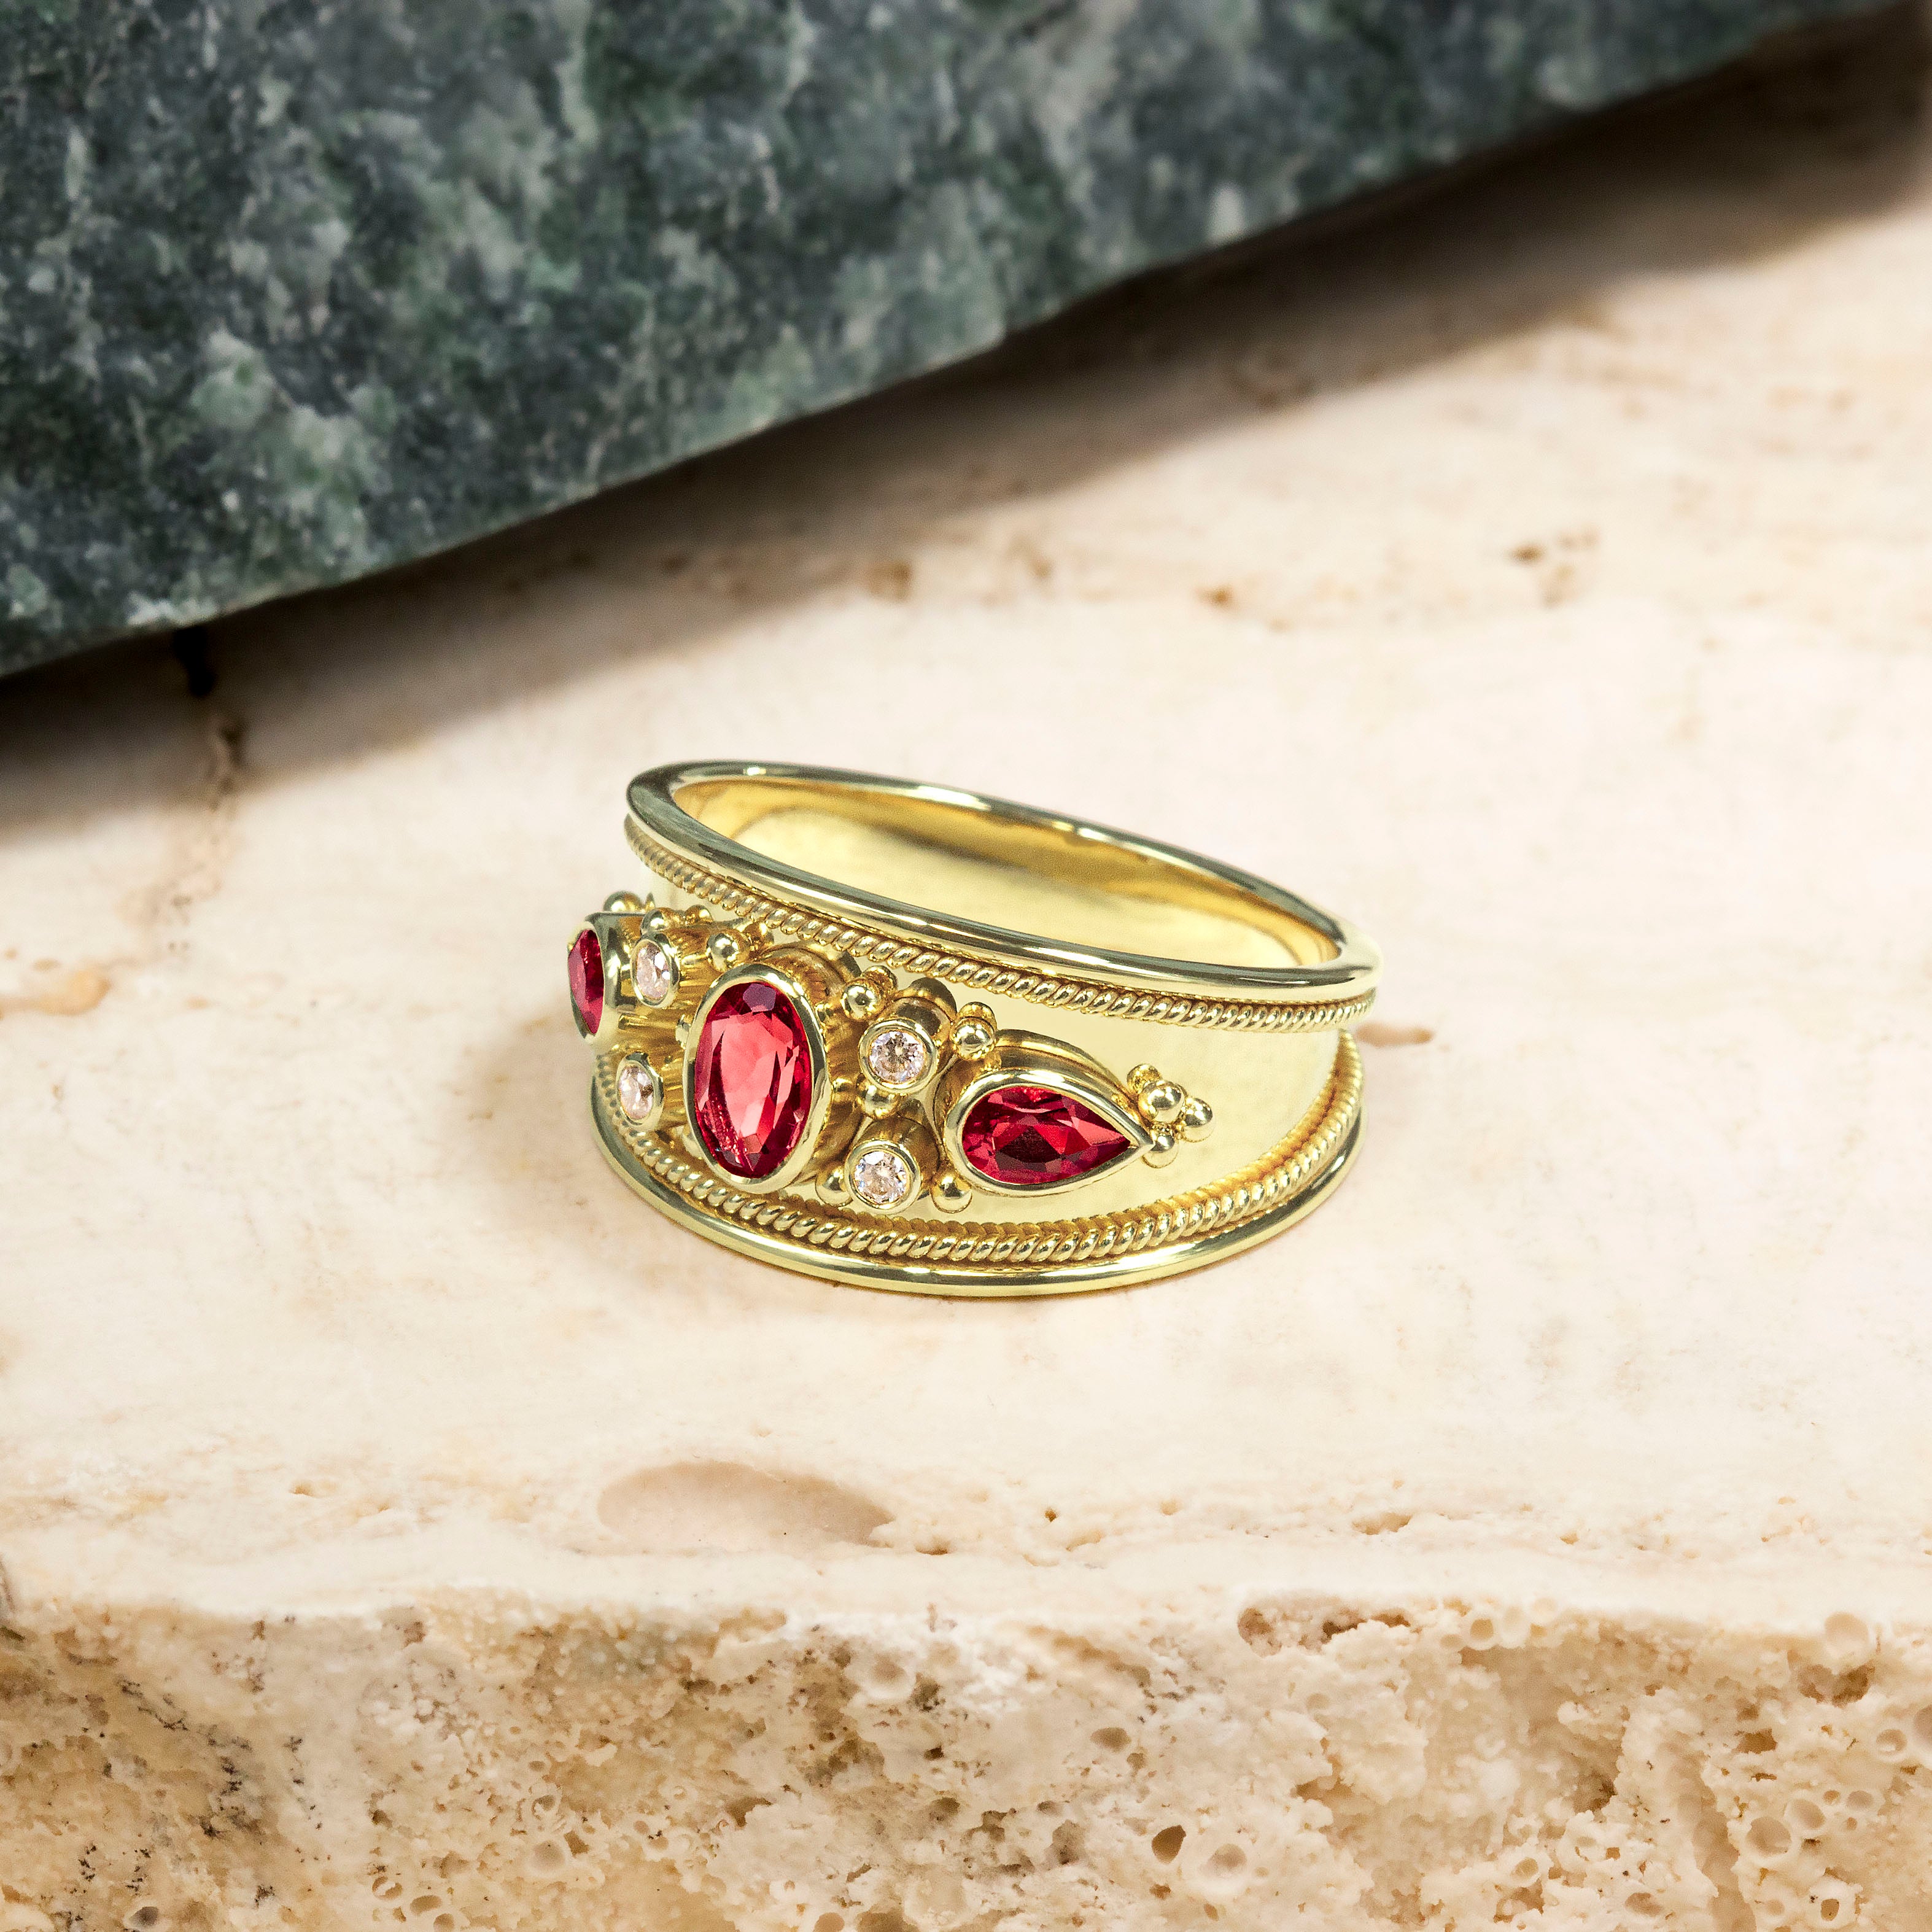 Byzantine Gold Ring with Rubies Diamonds and a Shiny Finish Odysseus Jewelry